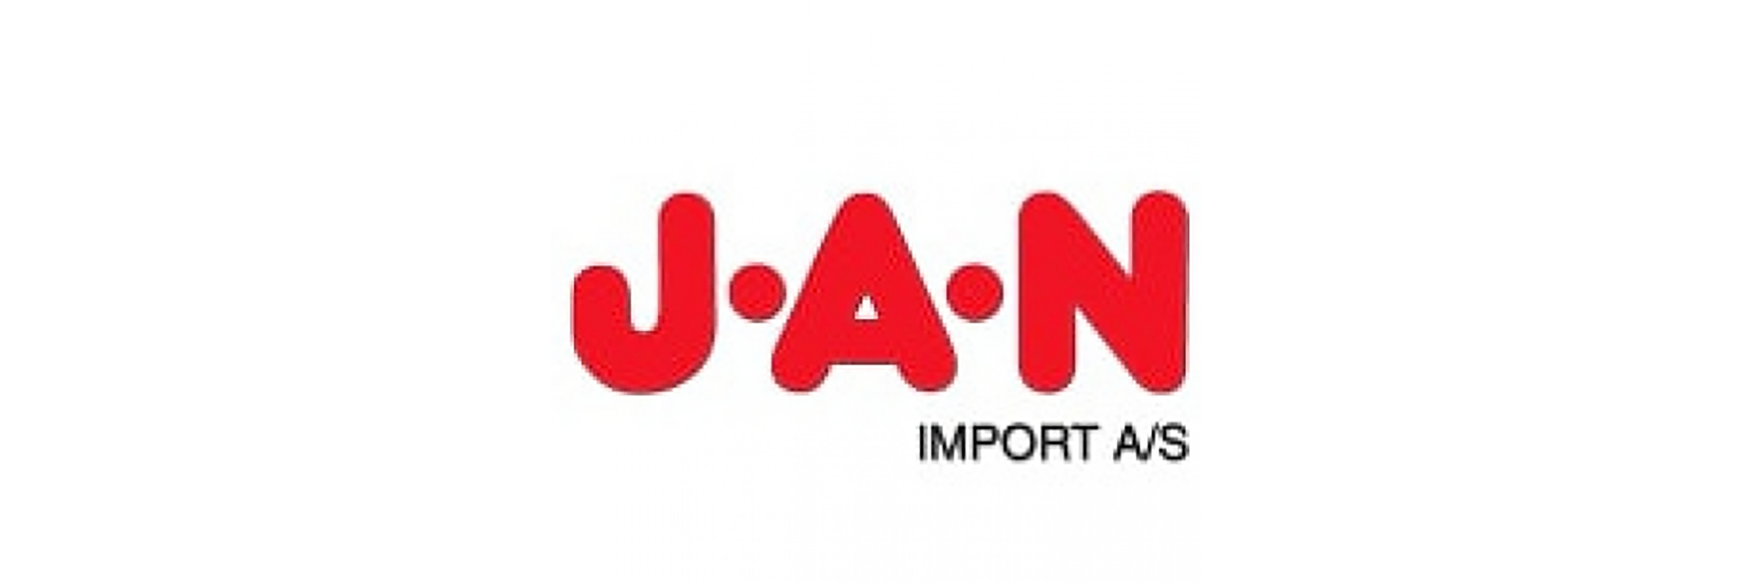 JAN Import A/S